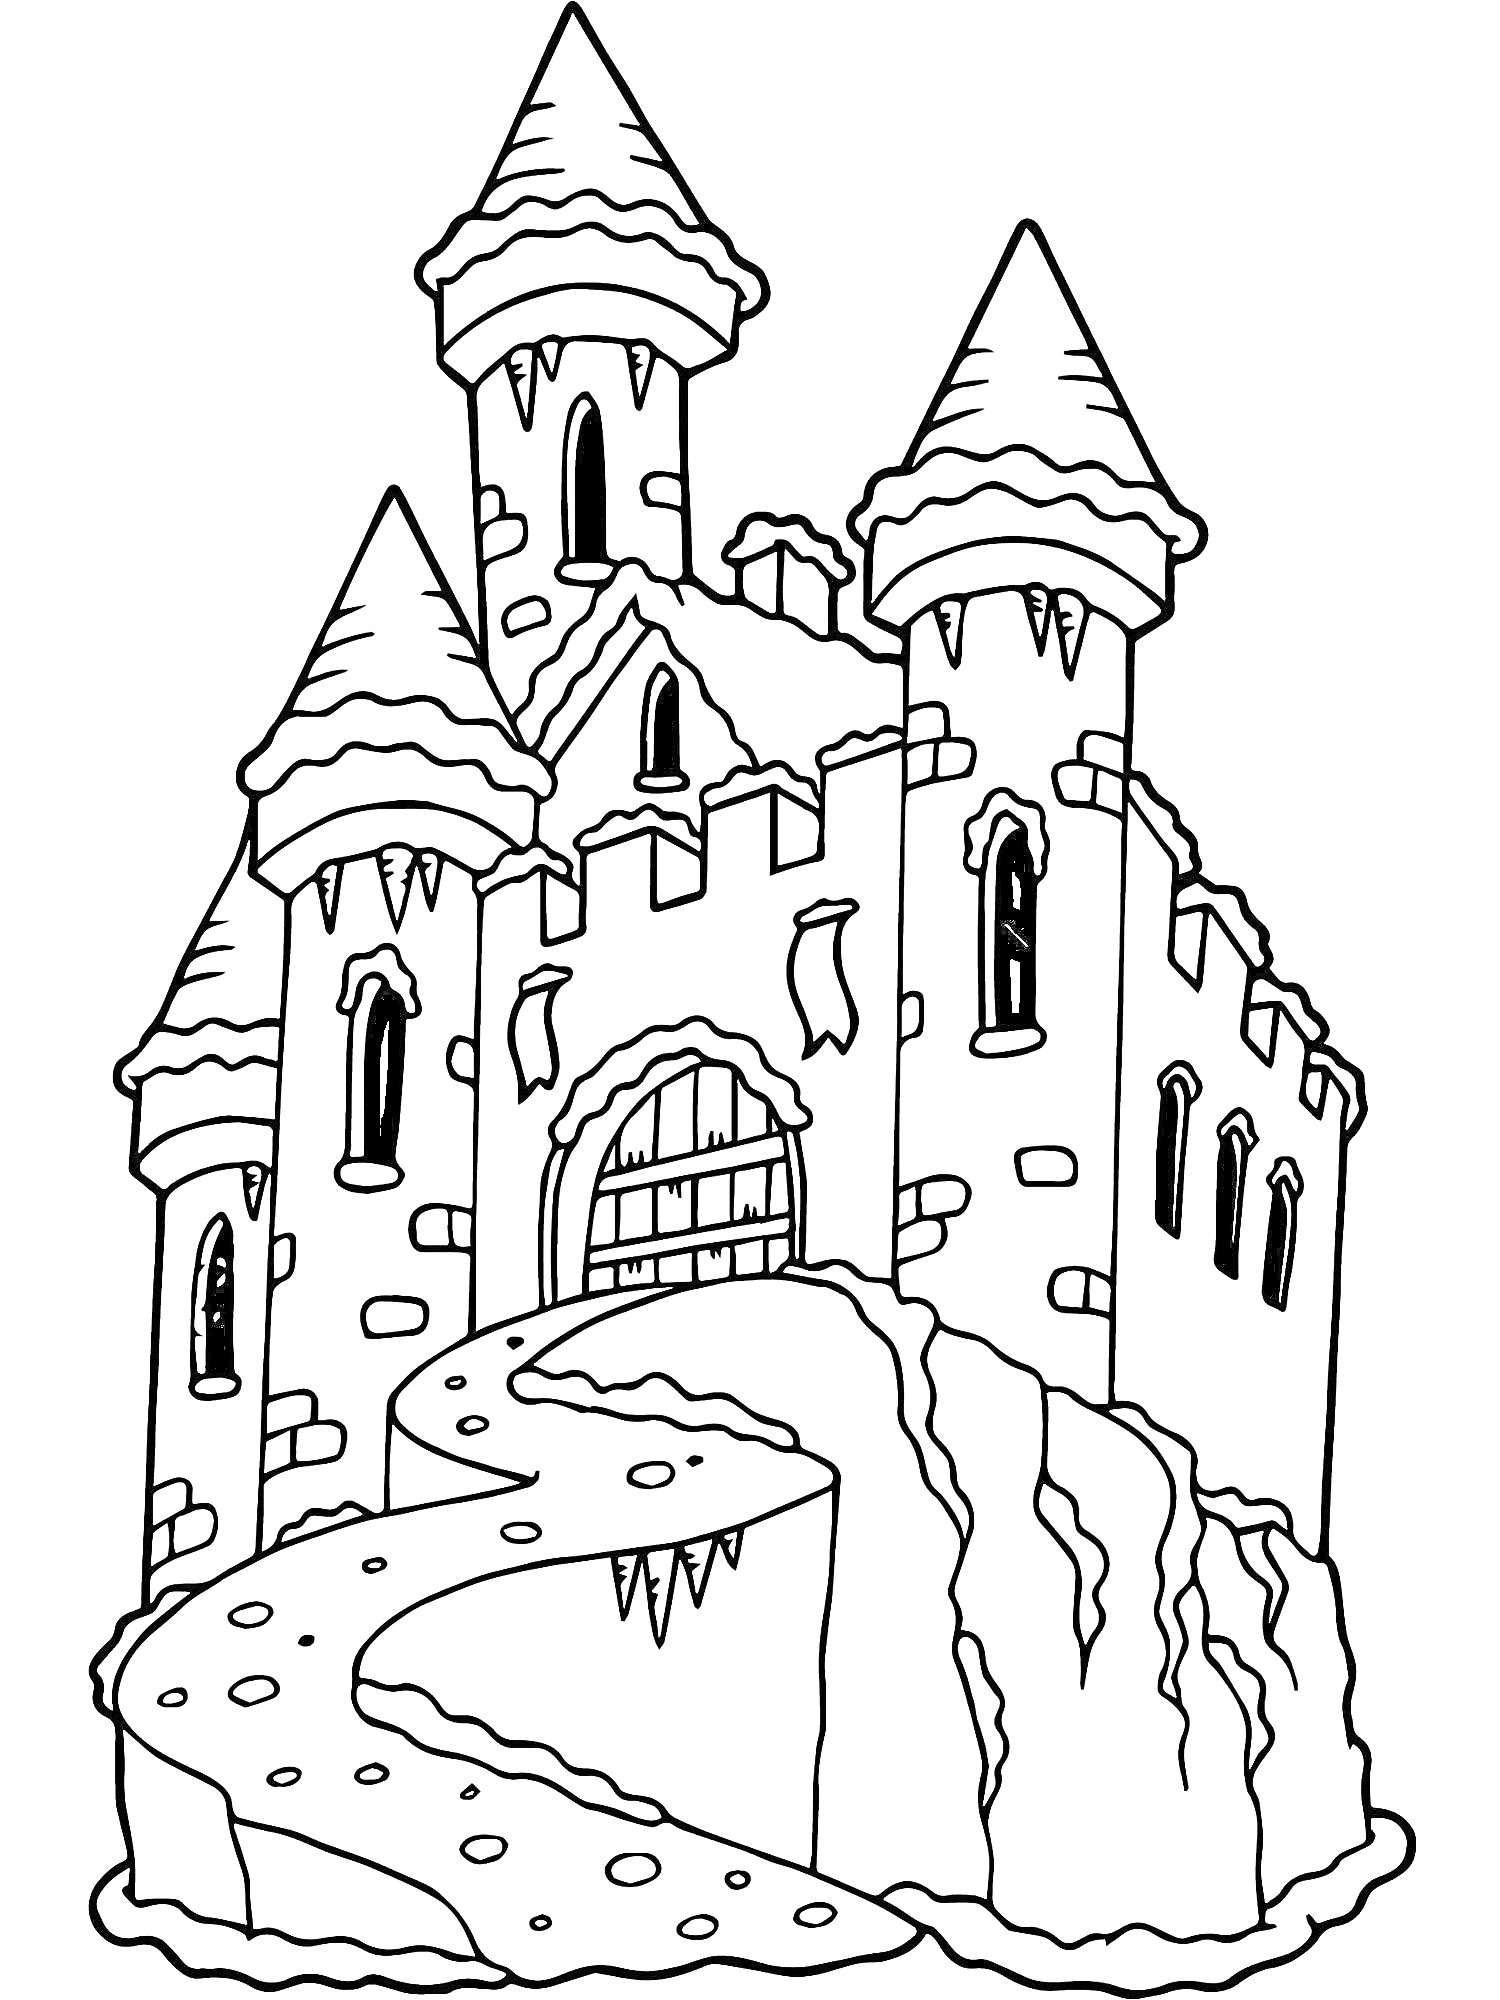 Раскраска Замок на скале с тремя башнями и спуском